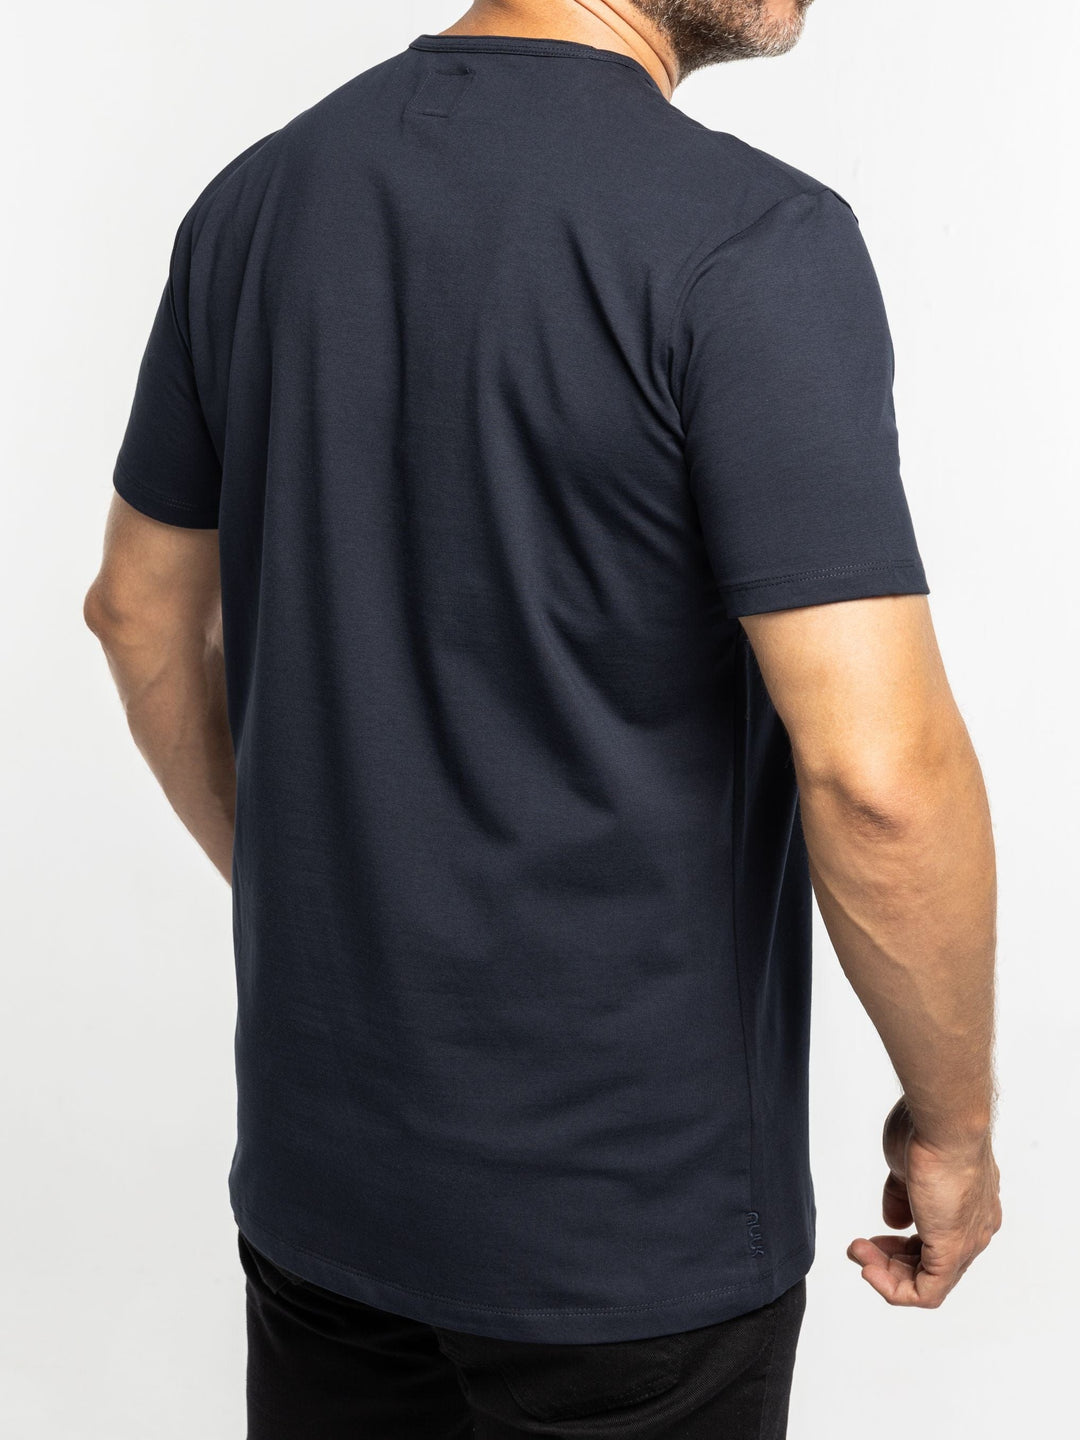 Zhivago x Nuuk Men T-shirt Navy Blue Straight Hem T-Shirt: SLS Comfort